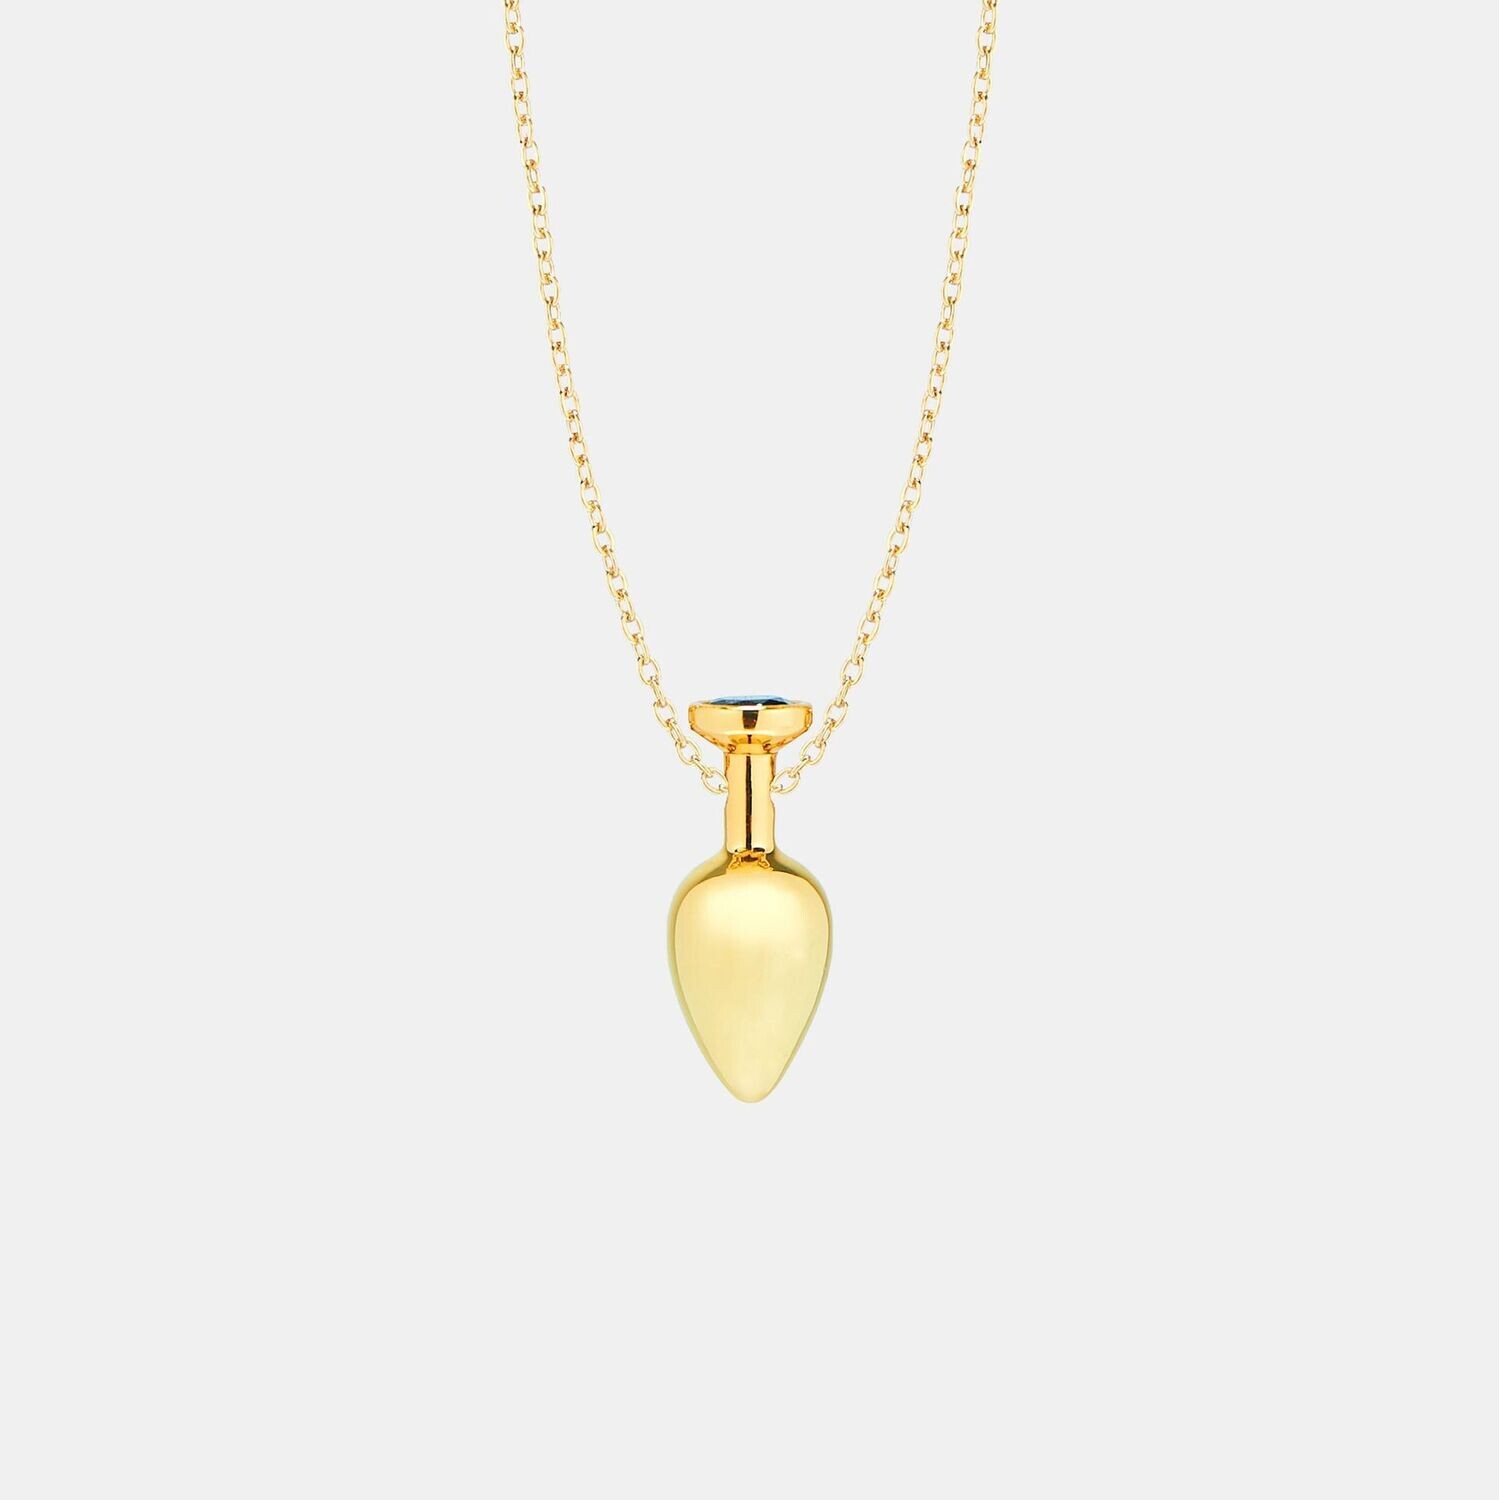 Hoemo World - Butt Plug Pendant Necklace - Gold